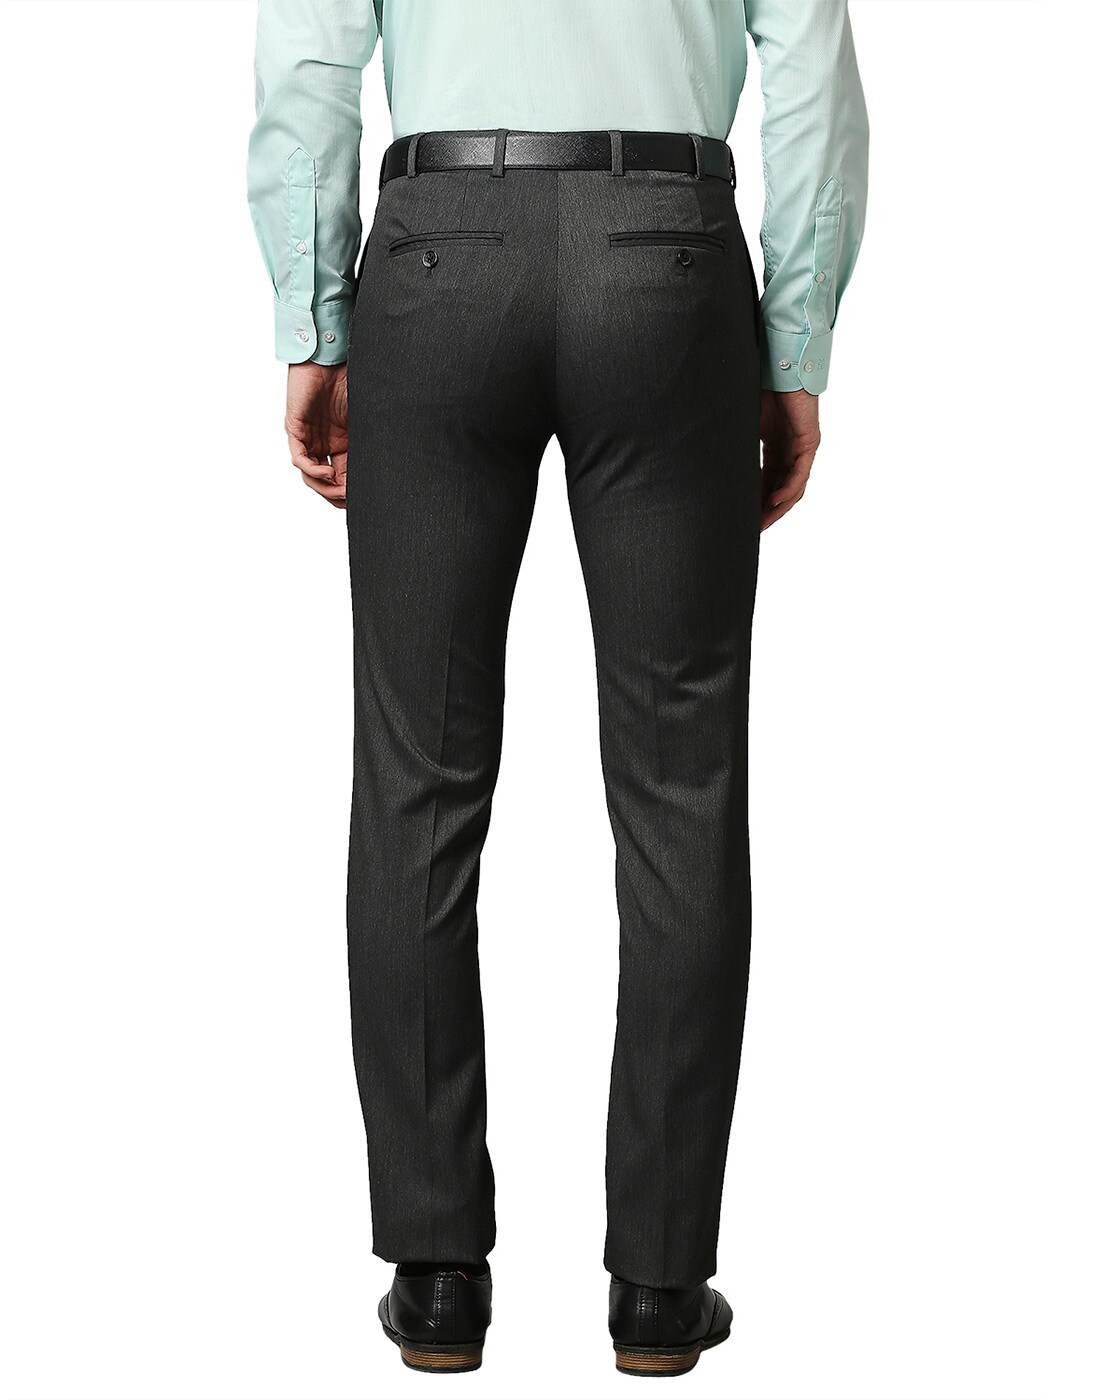 Buy Beige Trousers & Pants for Men by RAYMOND Online | Ajio.com